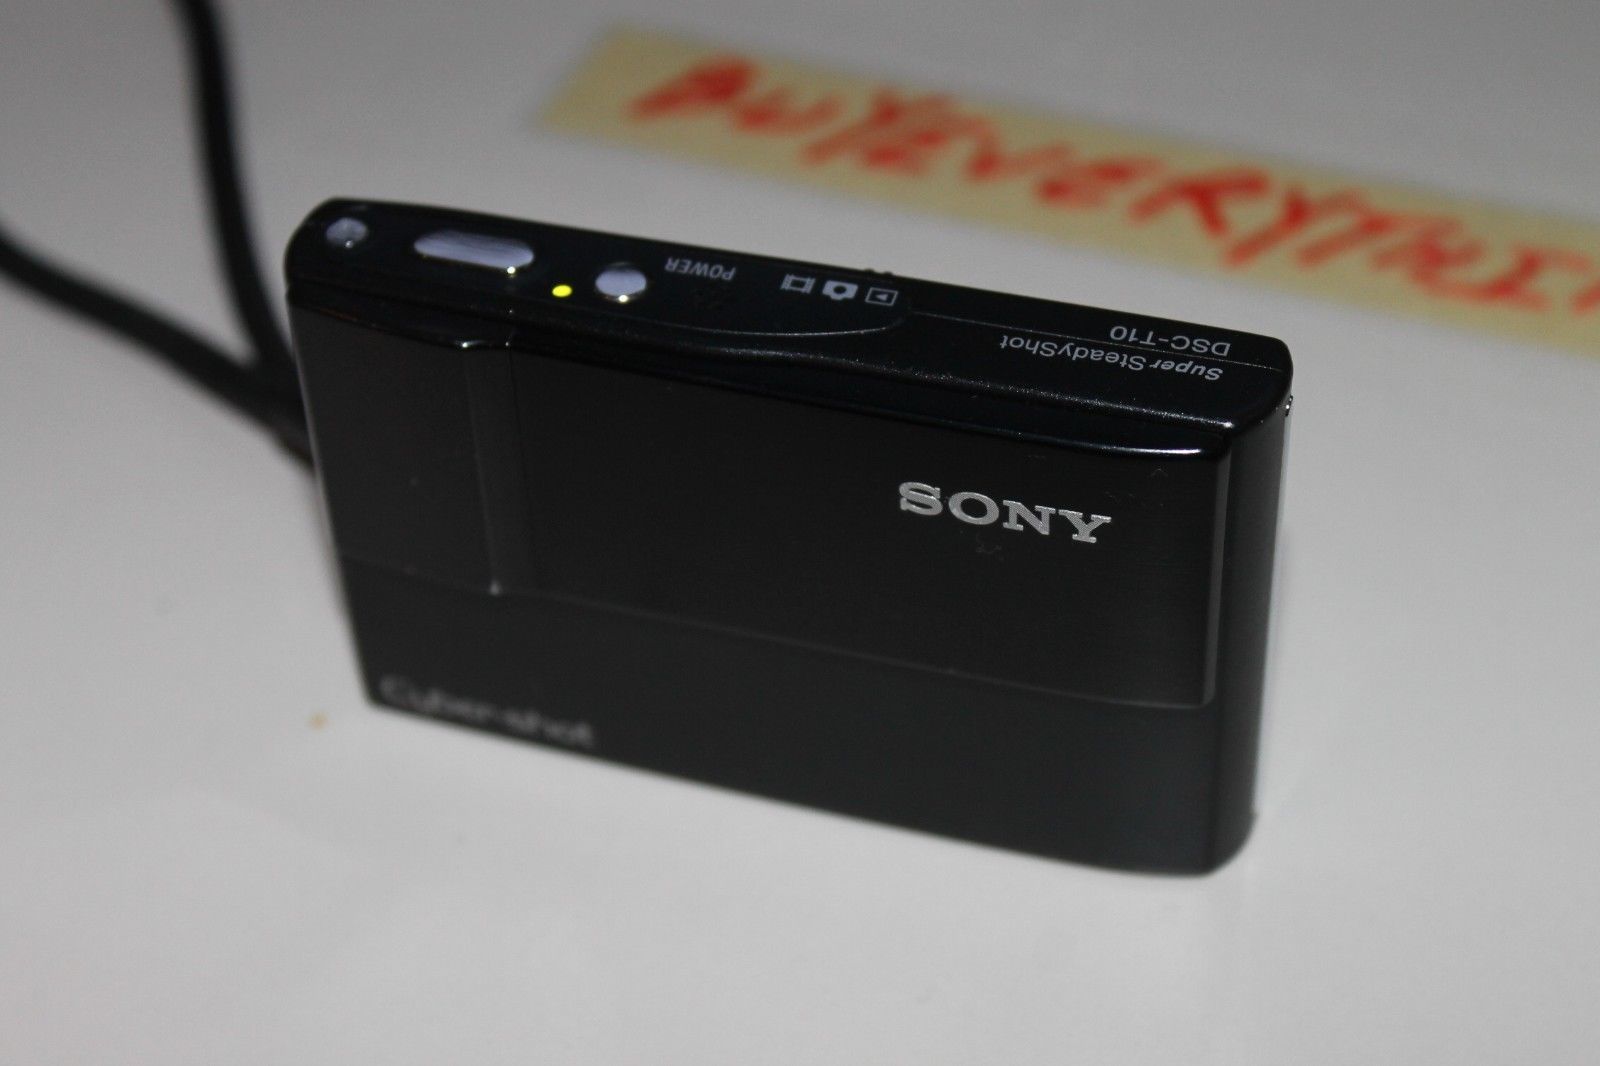 Sony Cyber-shot DSC-T10 7.2MP Digital Camera and 22 similar items